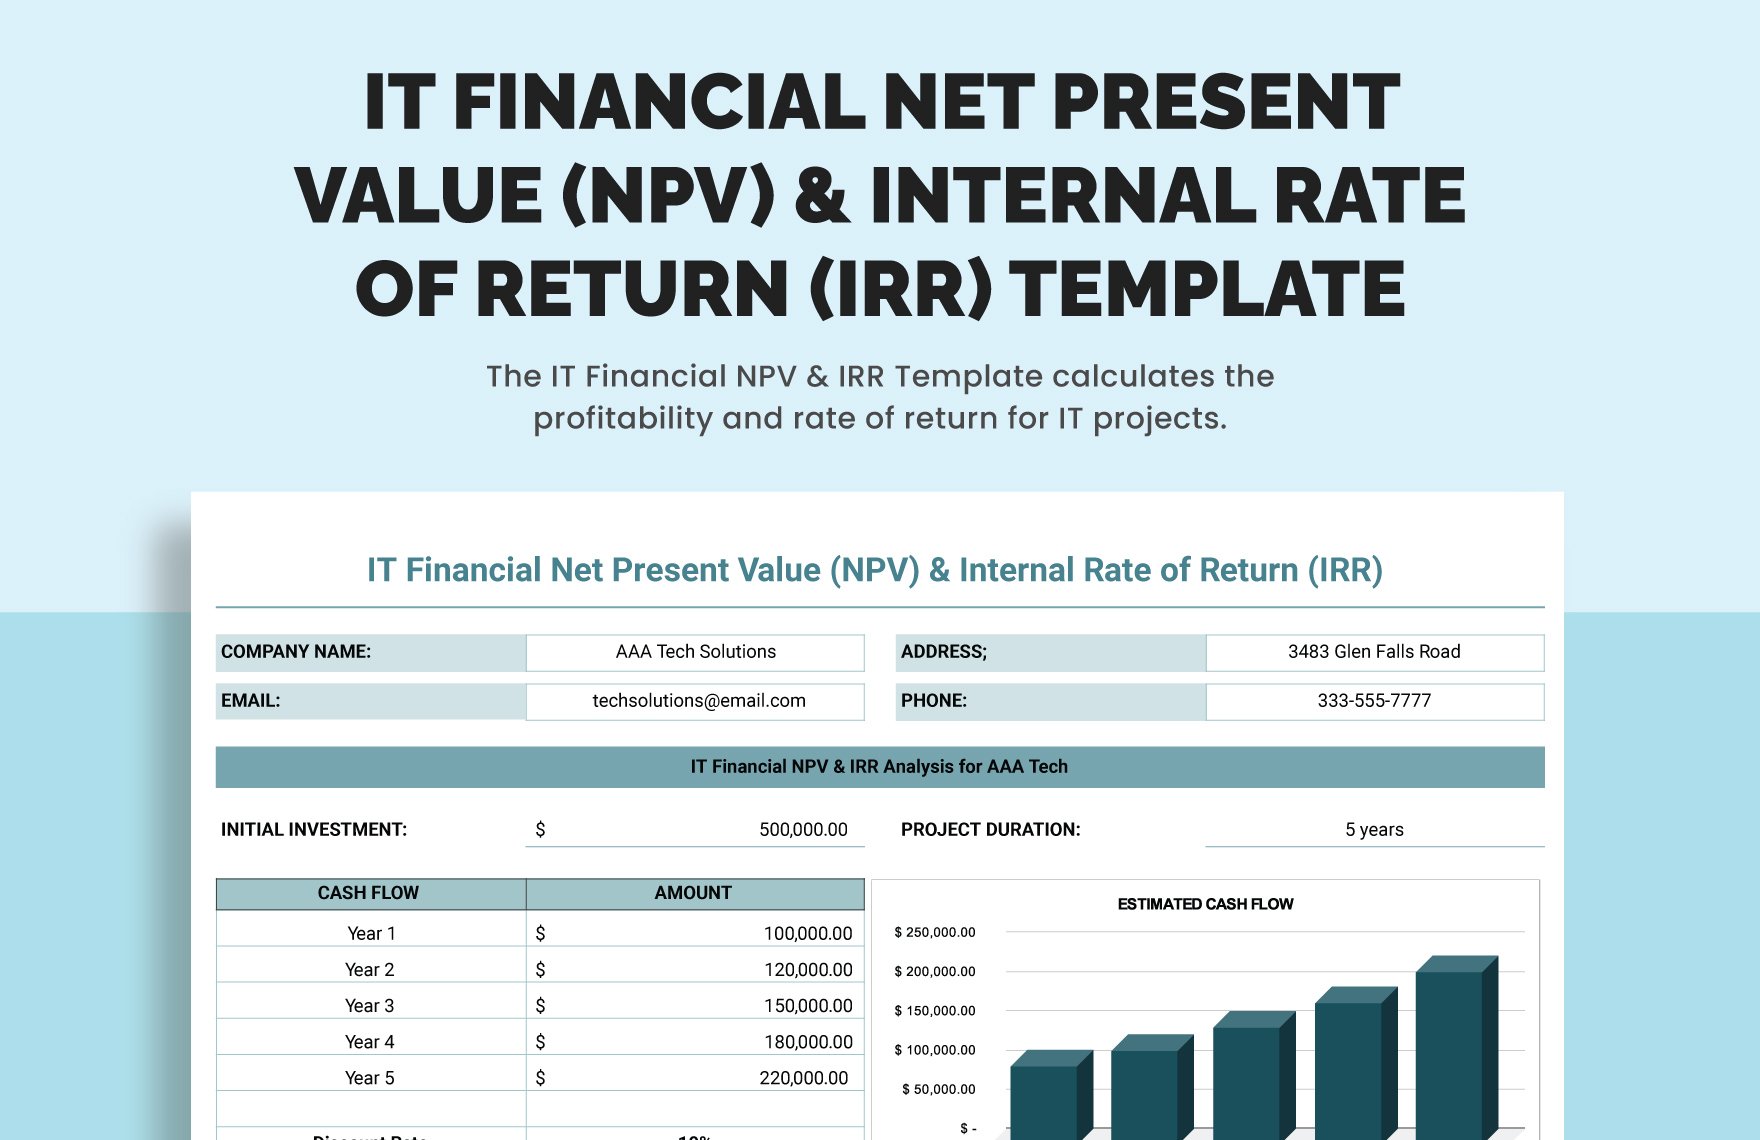 IT Financial Net Present Value (NPV) & Internal Rate of Return (IRR) Template